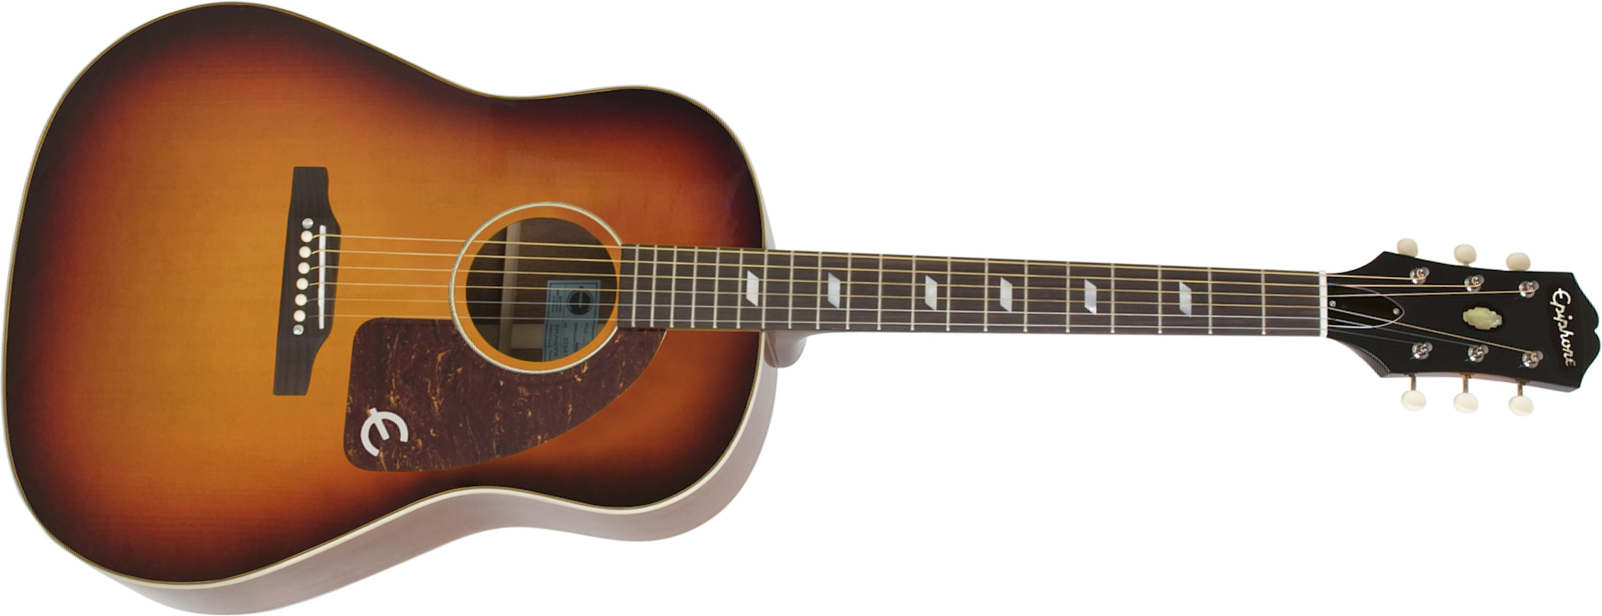 Epiphone Texan Usa Dreadnought Epicea Acajou Rw - Vintage Sunburst - Electro acoustic guitar - Main picture